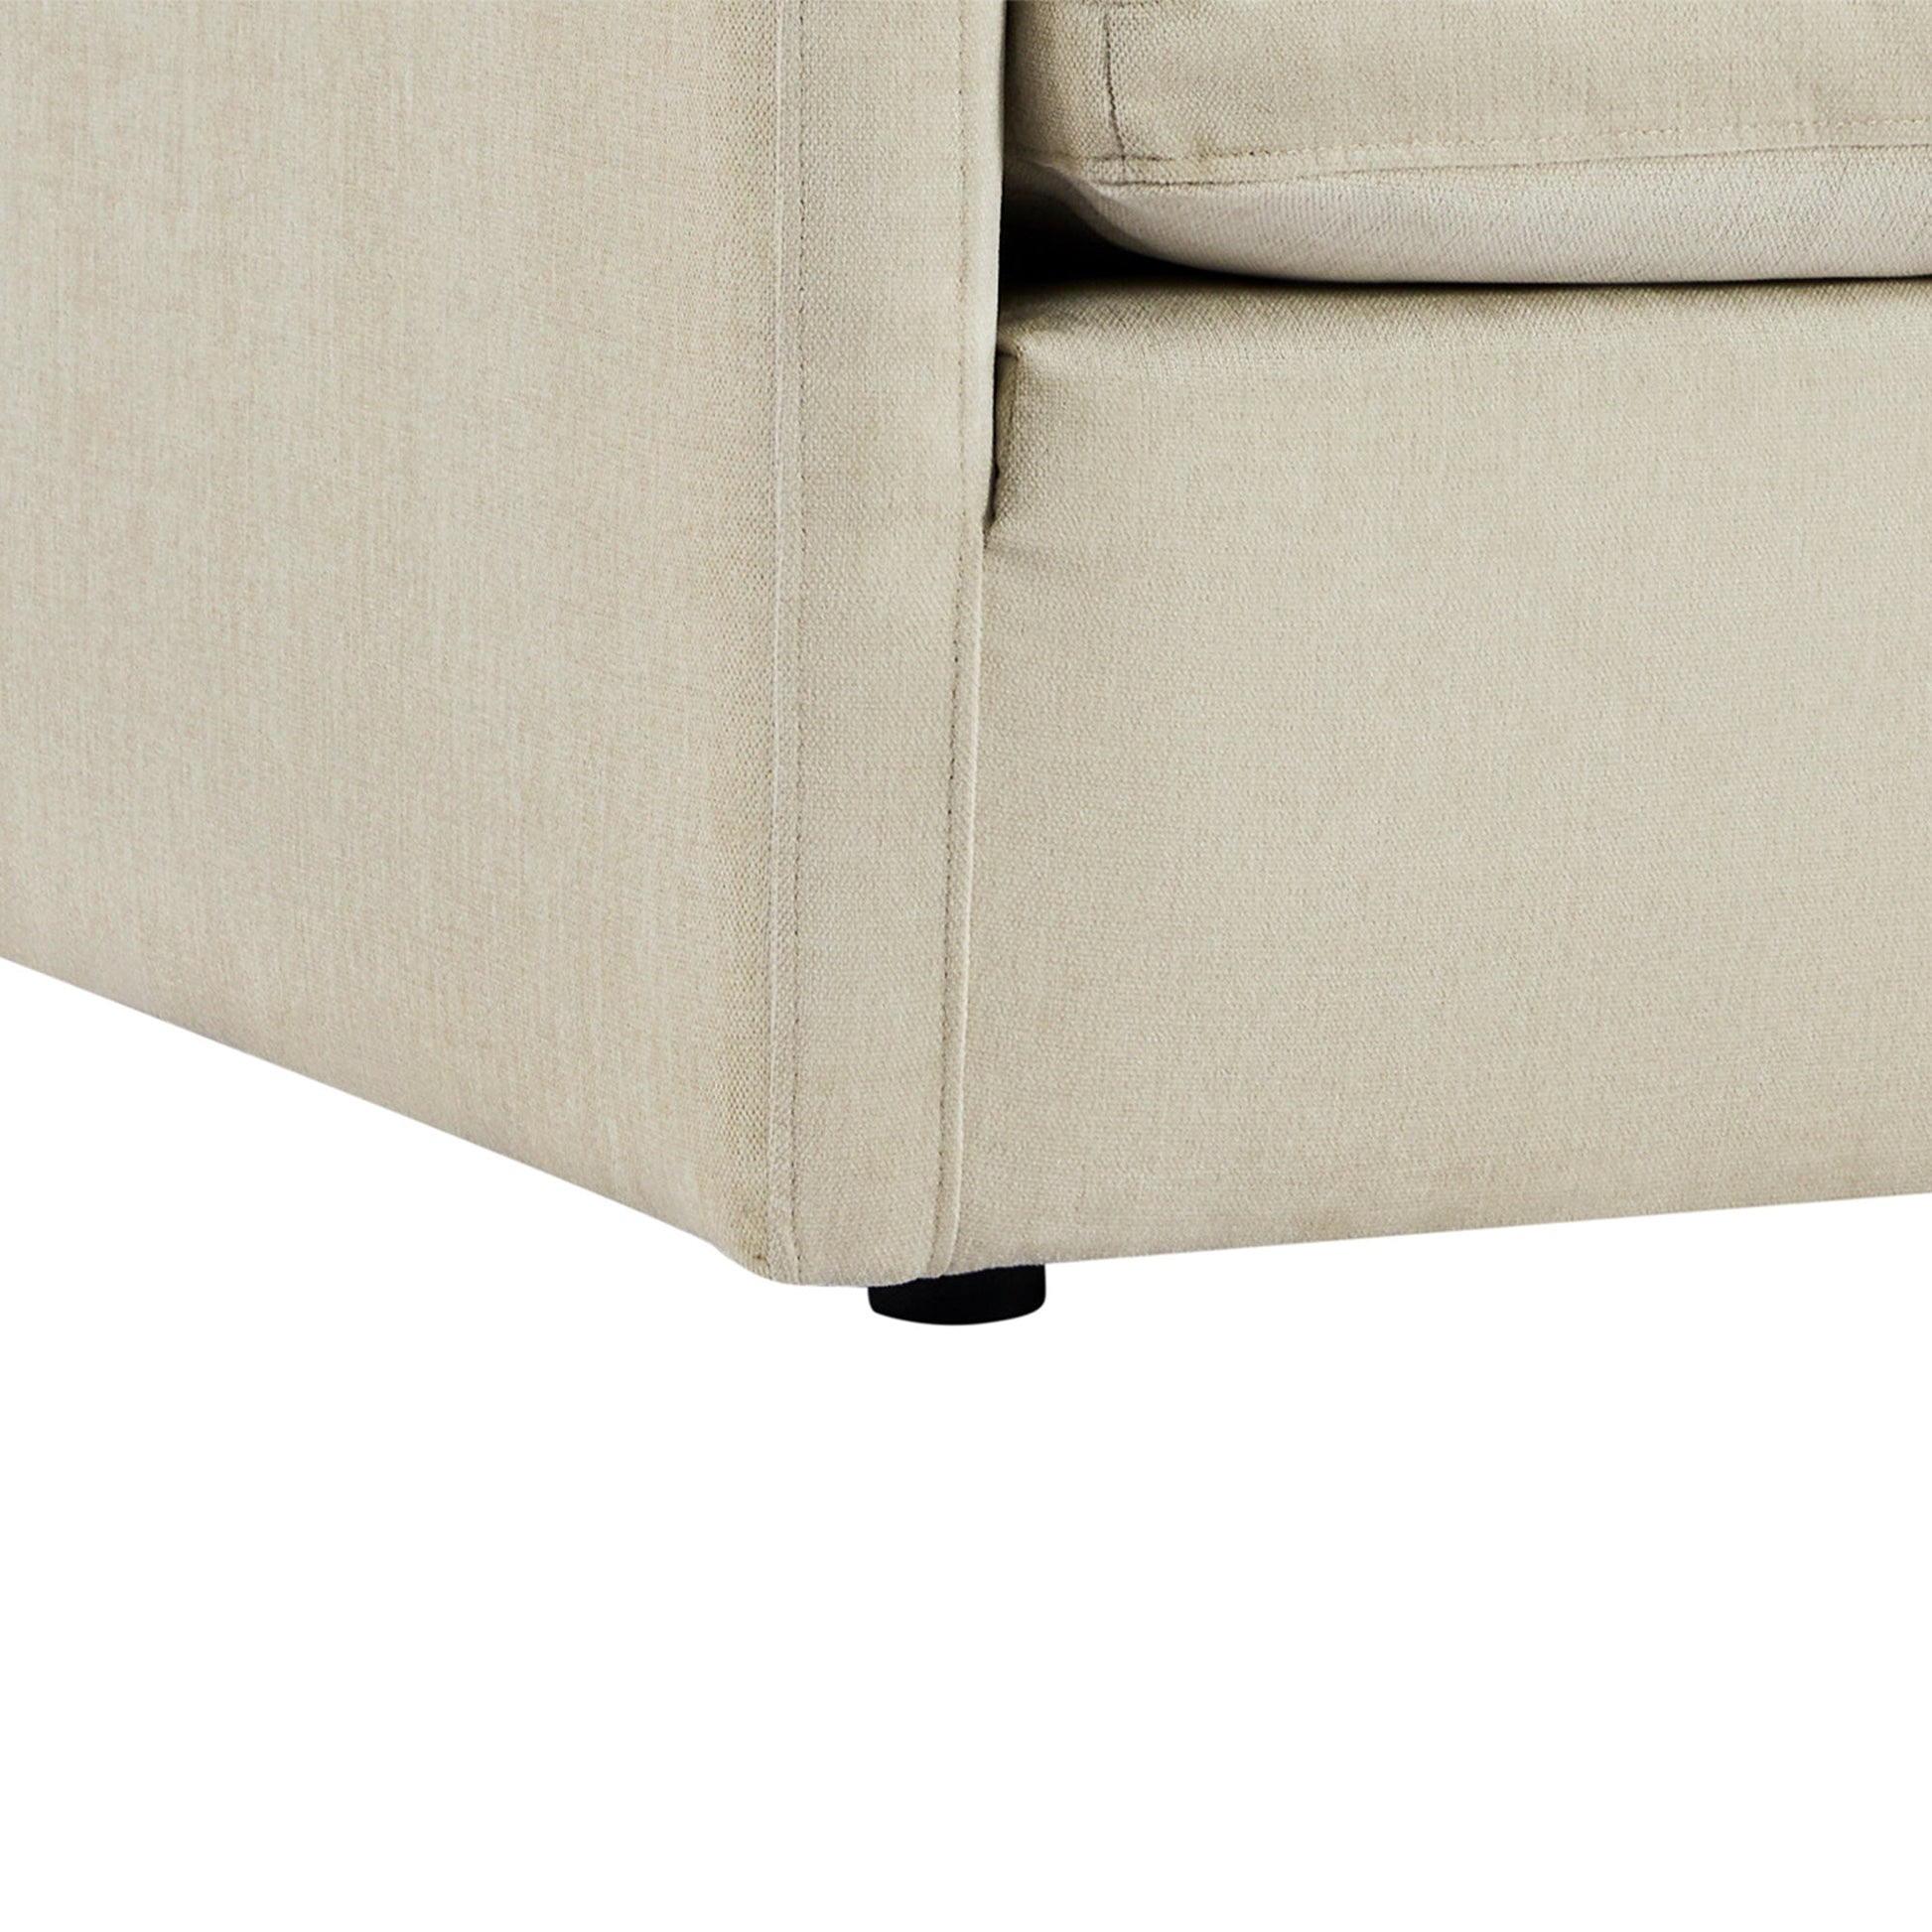 CHITA LIVING-Kenna 2-Piece Modular Sofa (90")-Sofas-Fabric-Cream-